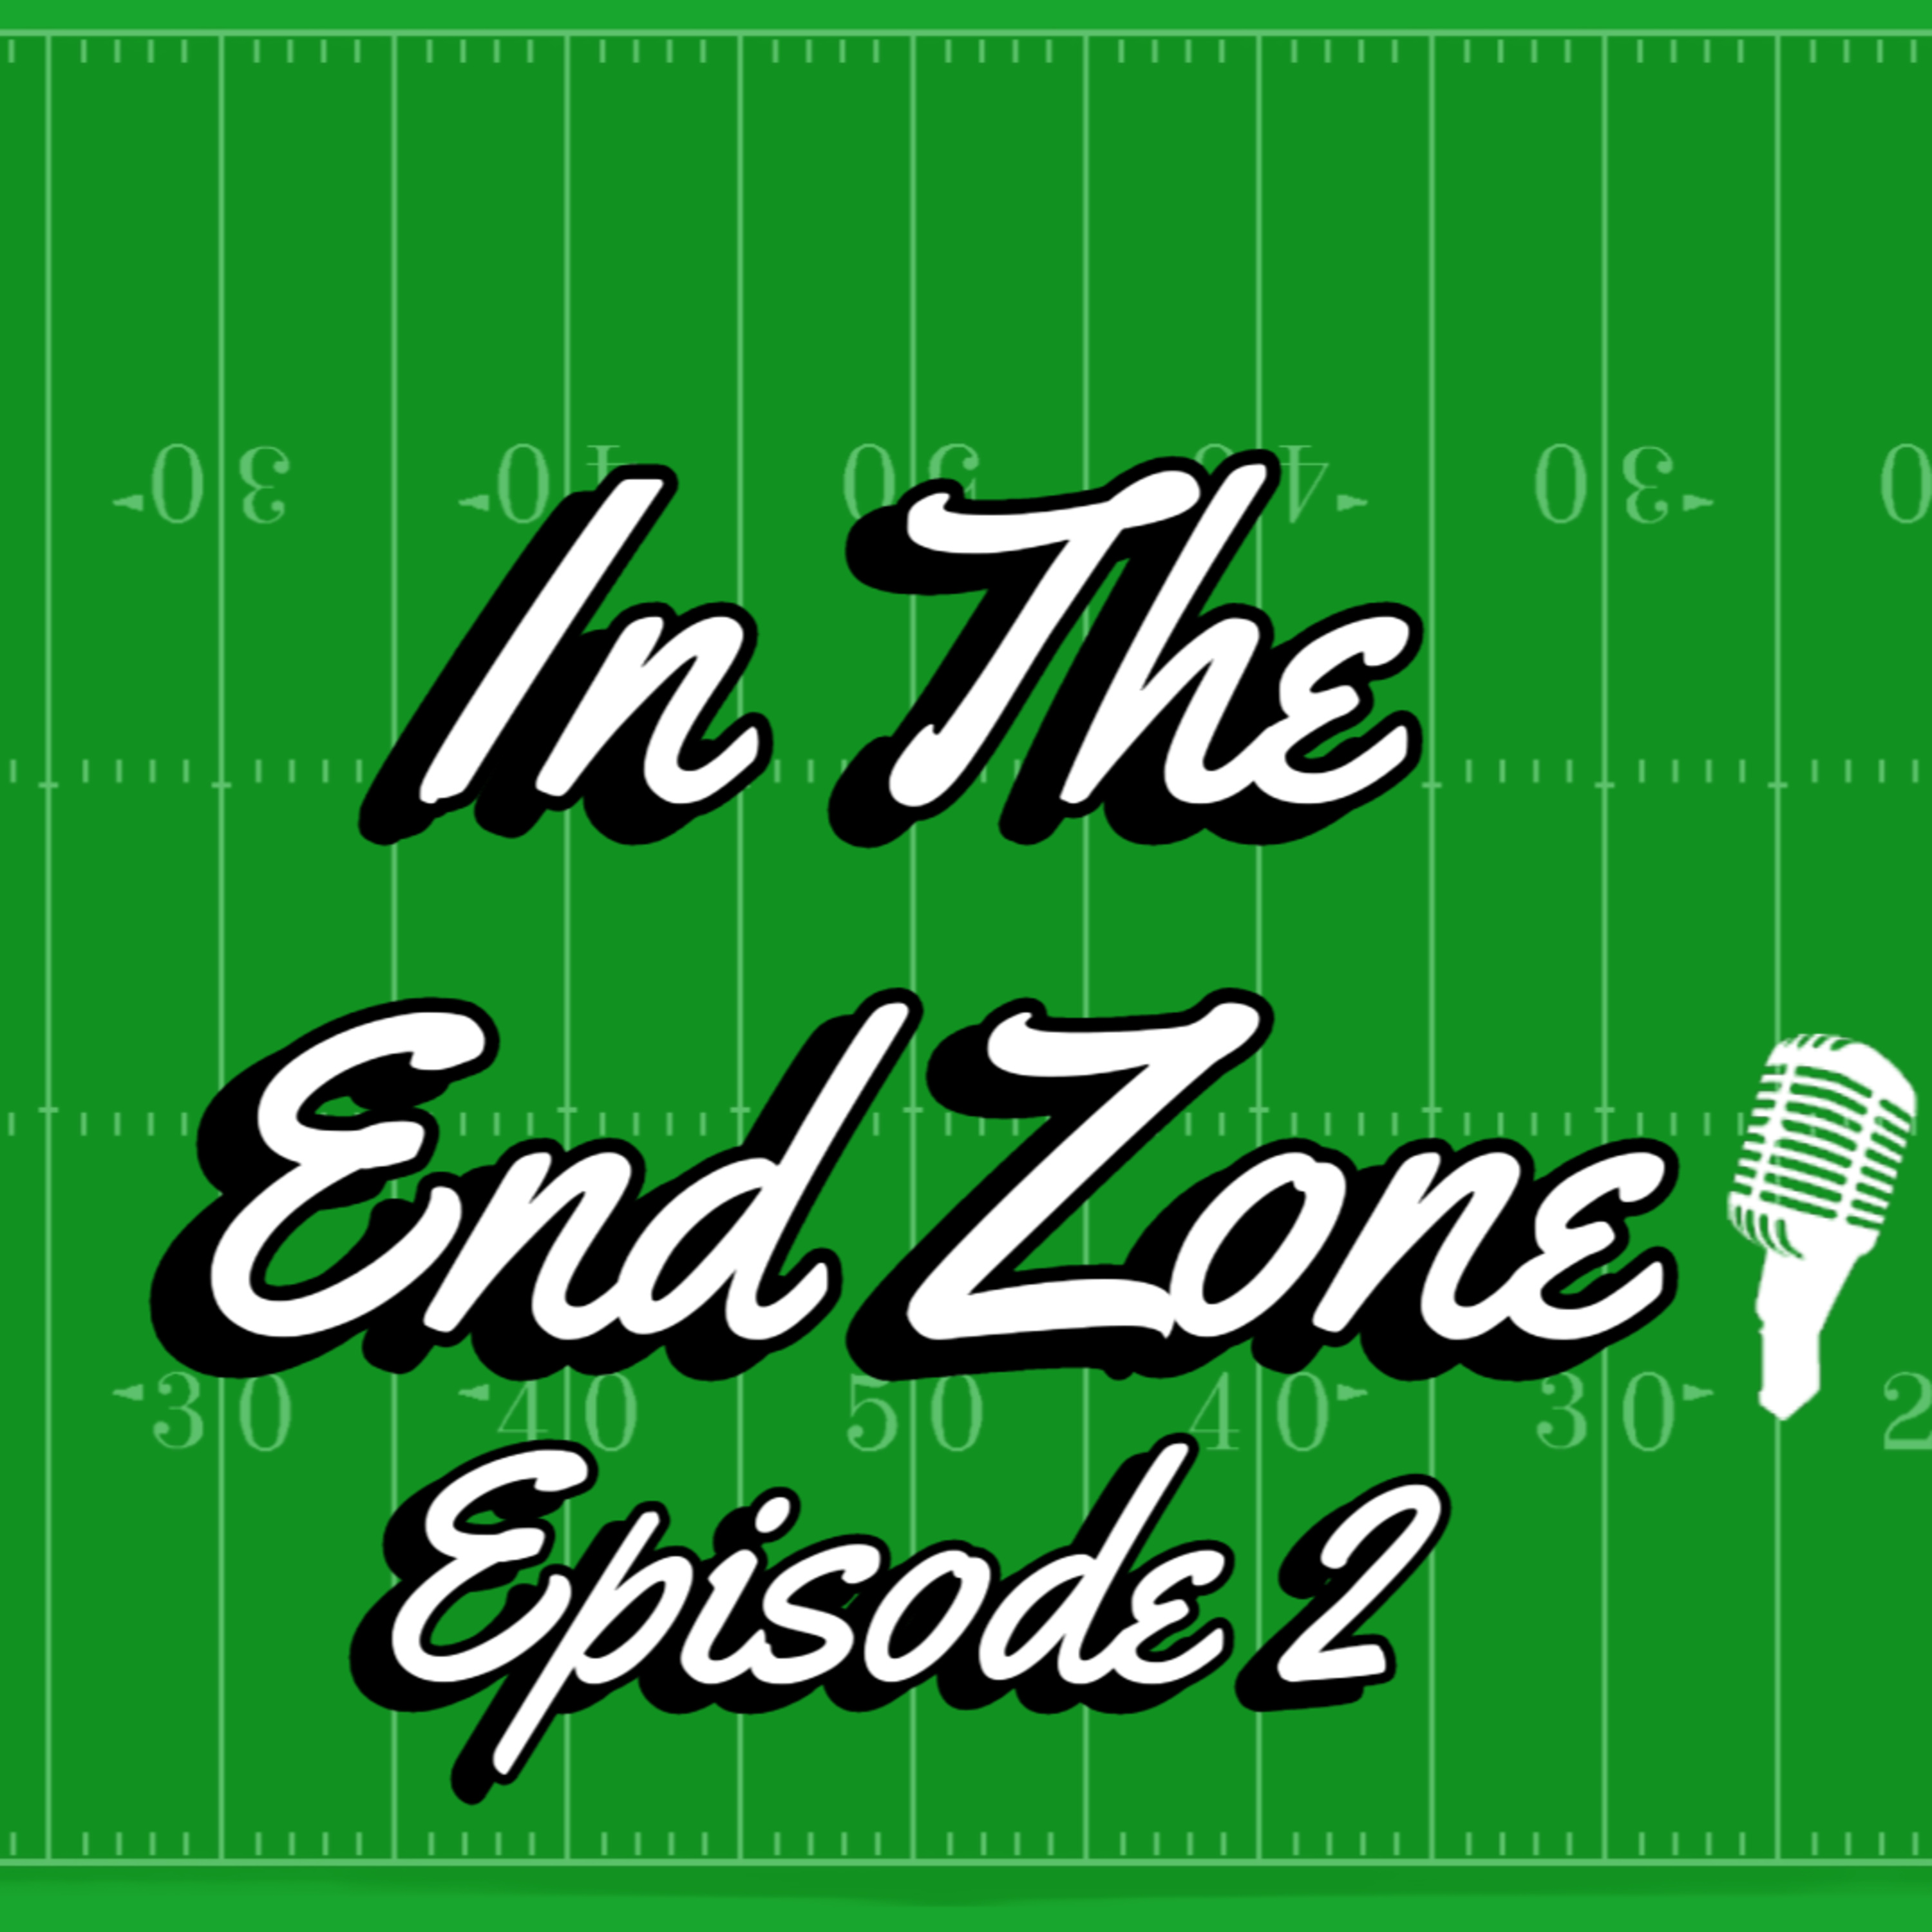 In the End Zone Episode 2: Week 1 Power Rankings